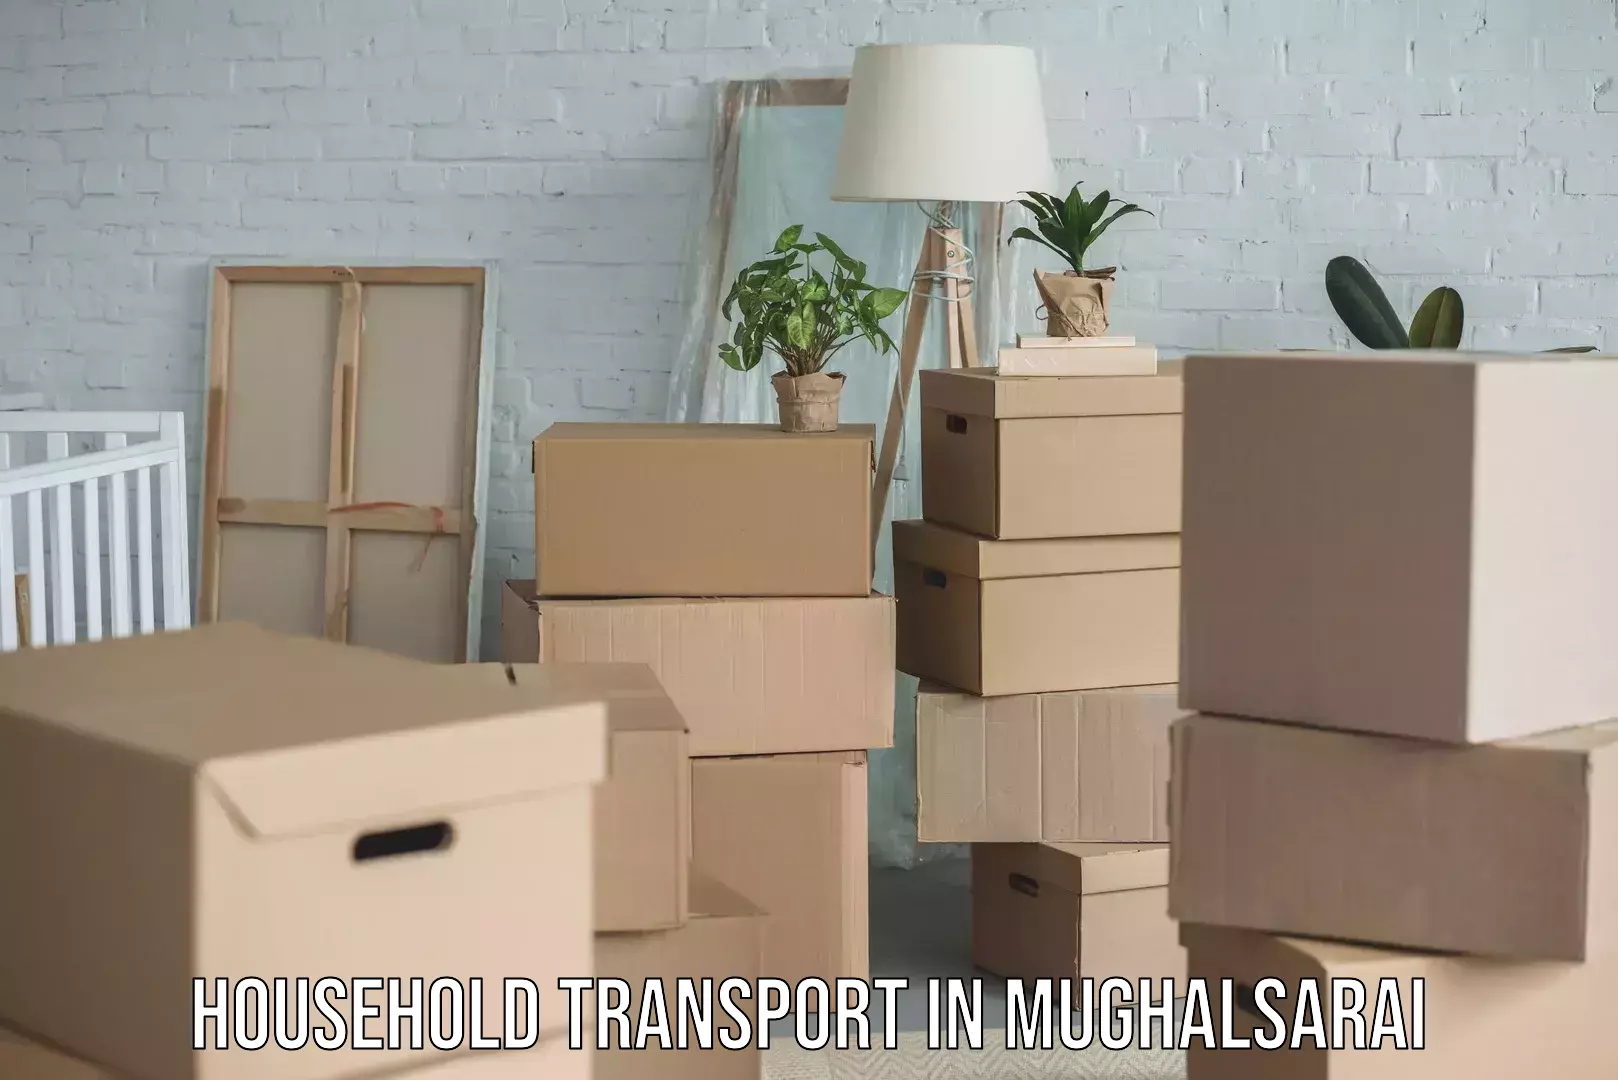 Household transport experts in Mughalsarai